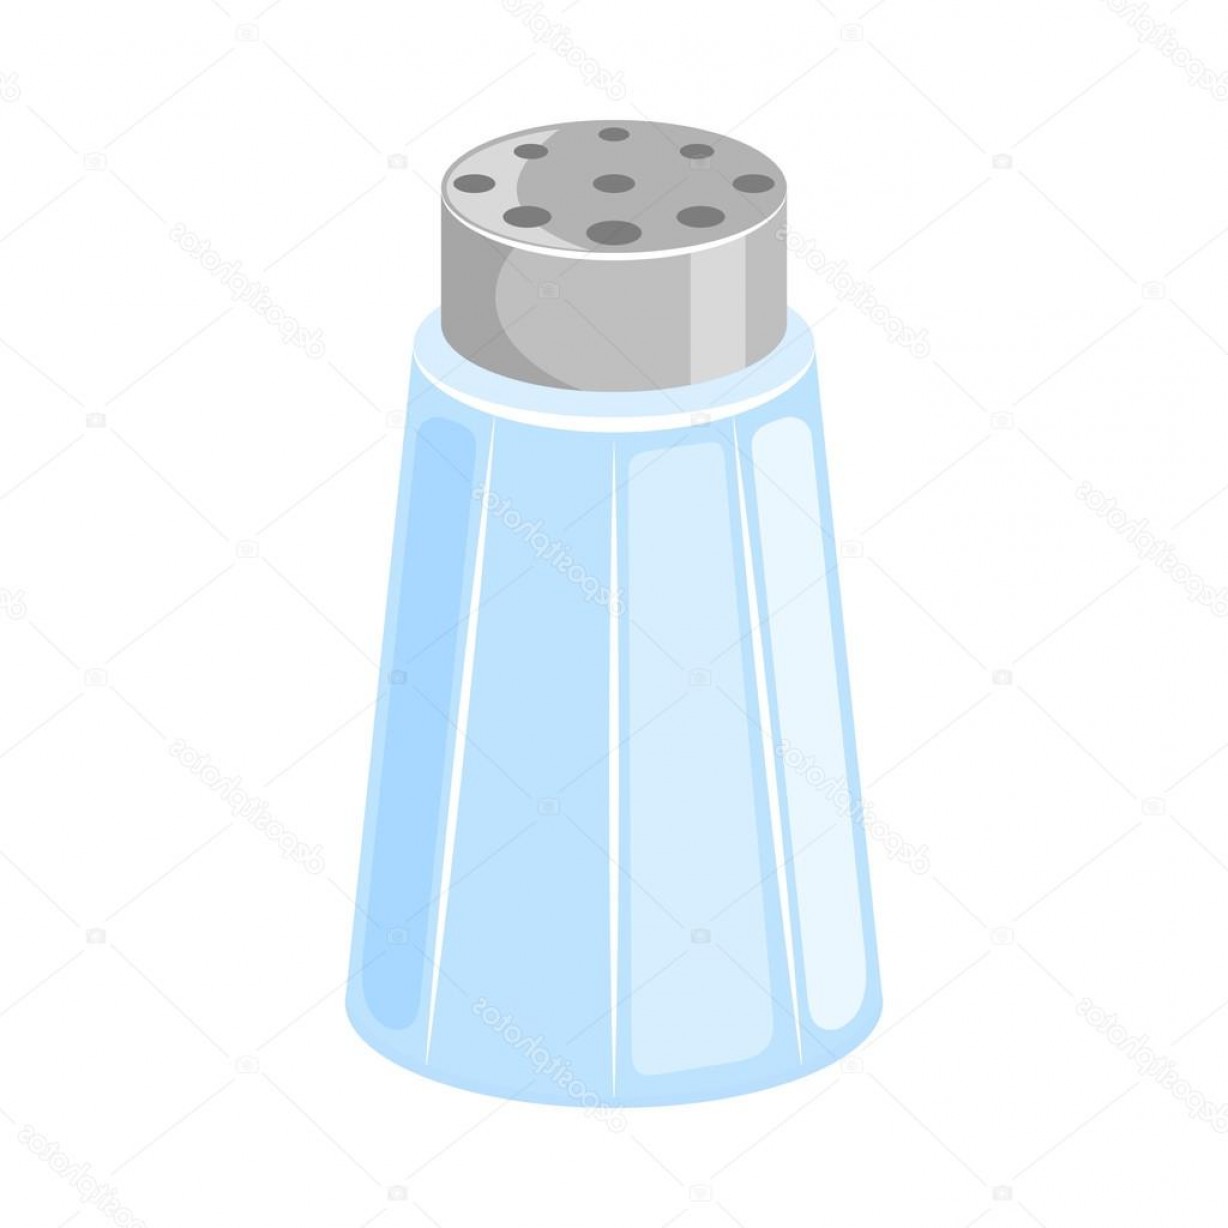 Salt Shaker vector